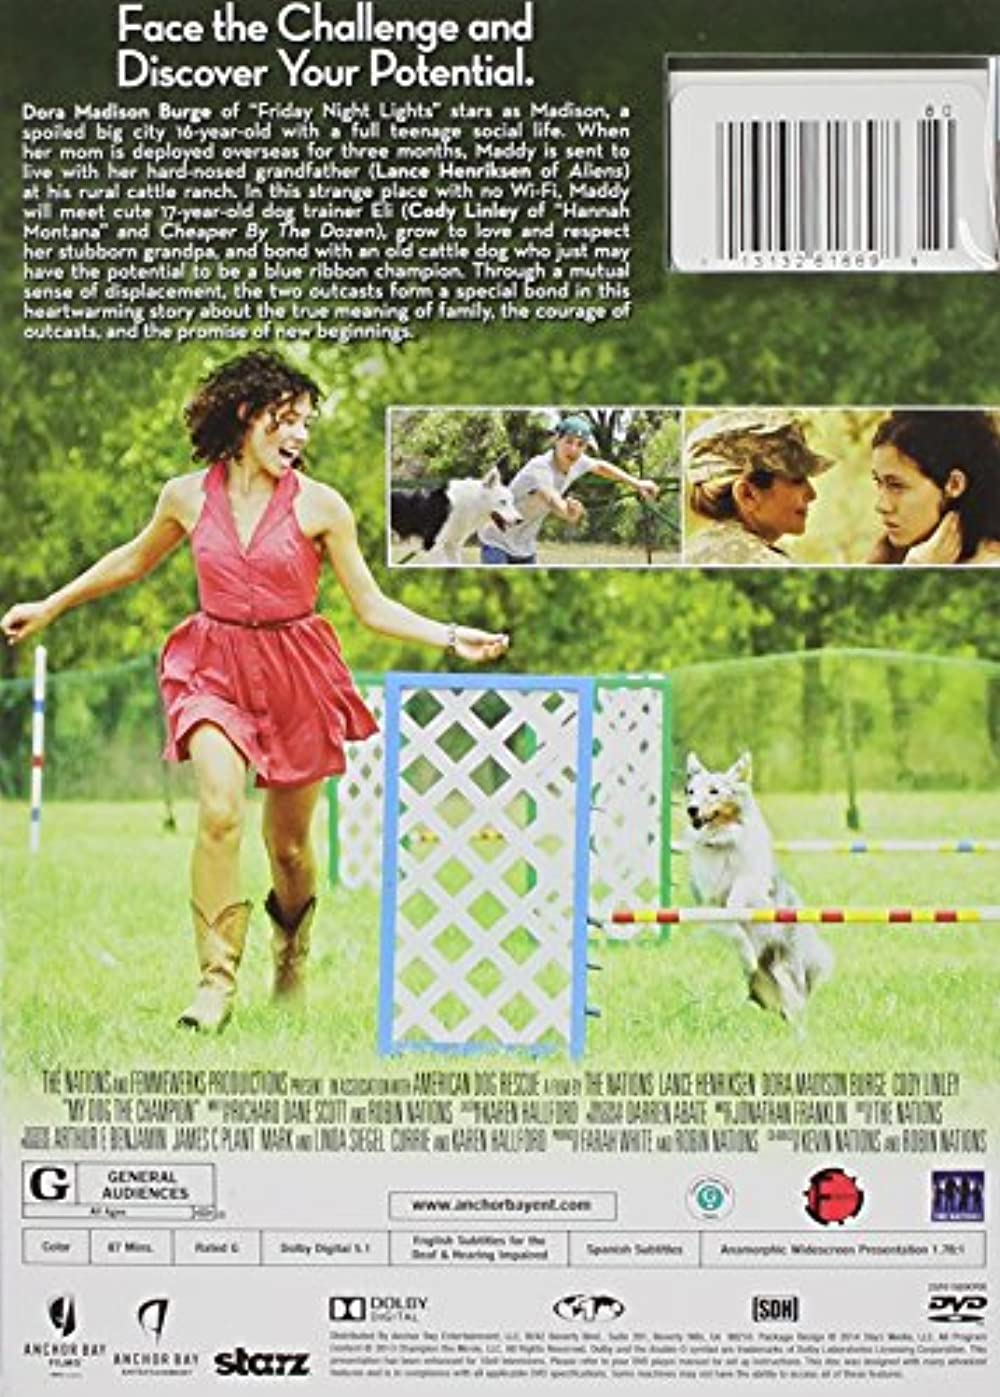 My Dog the Champion (DVD) - image 2 of 2